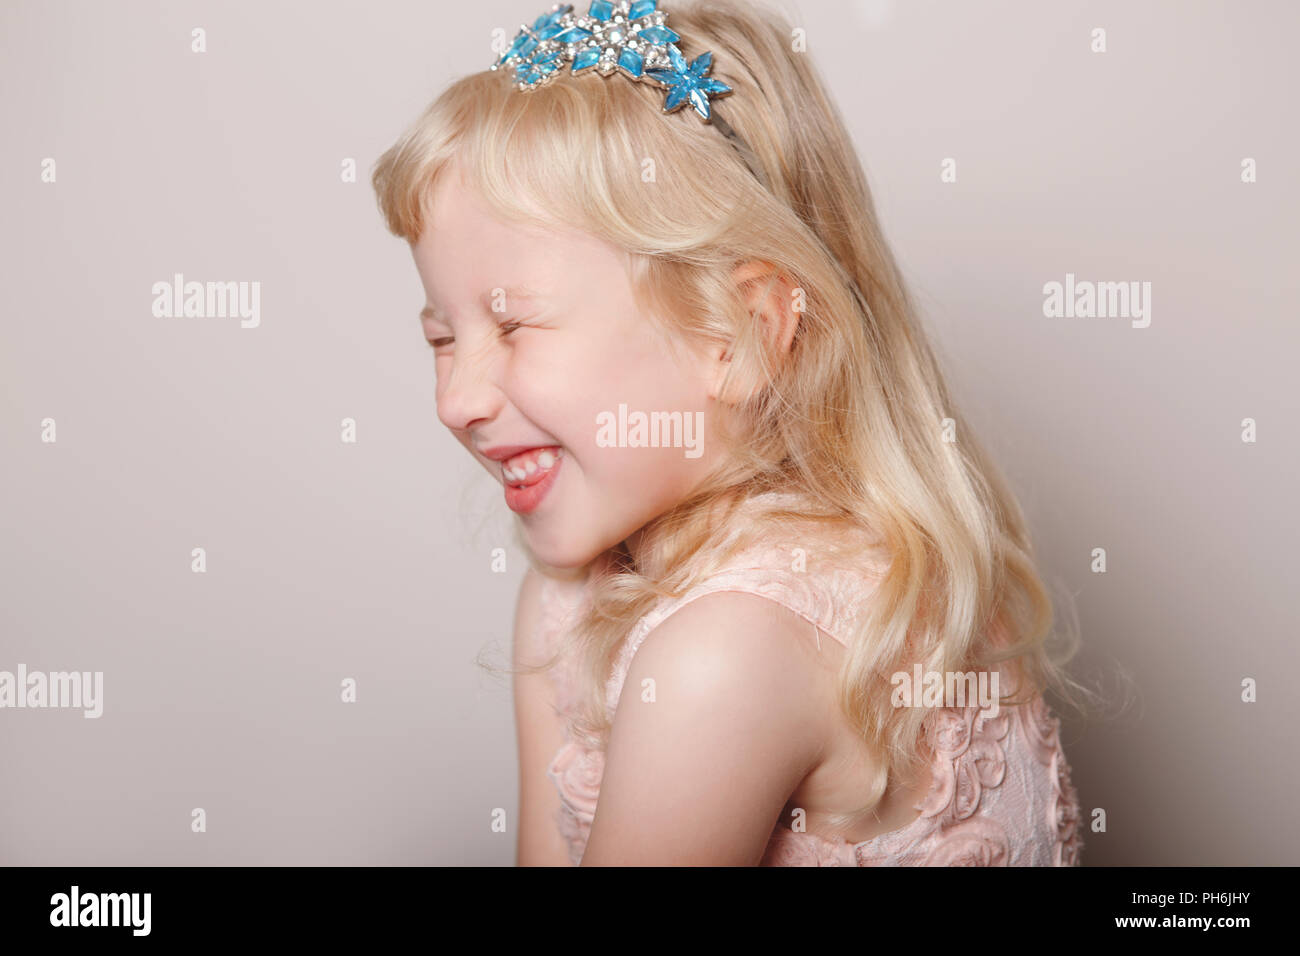 Closeup portrait of cute adorable white blonde fair Caucasian preschool girl in pink dress and princess crown. Child smiling laughing posing in studio Stock Photo